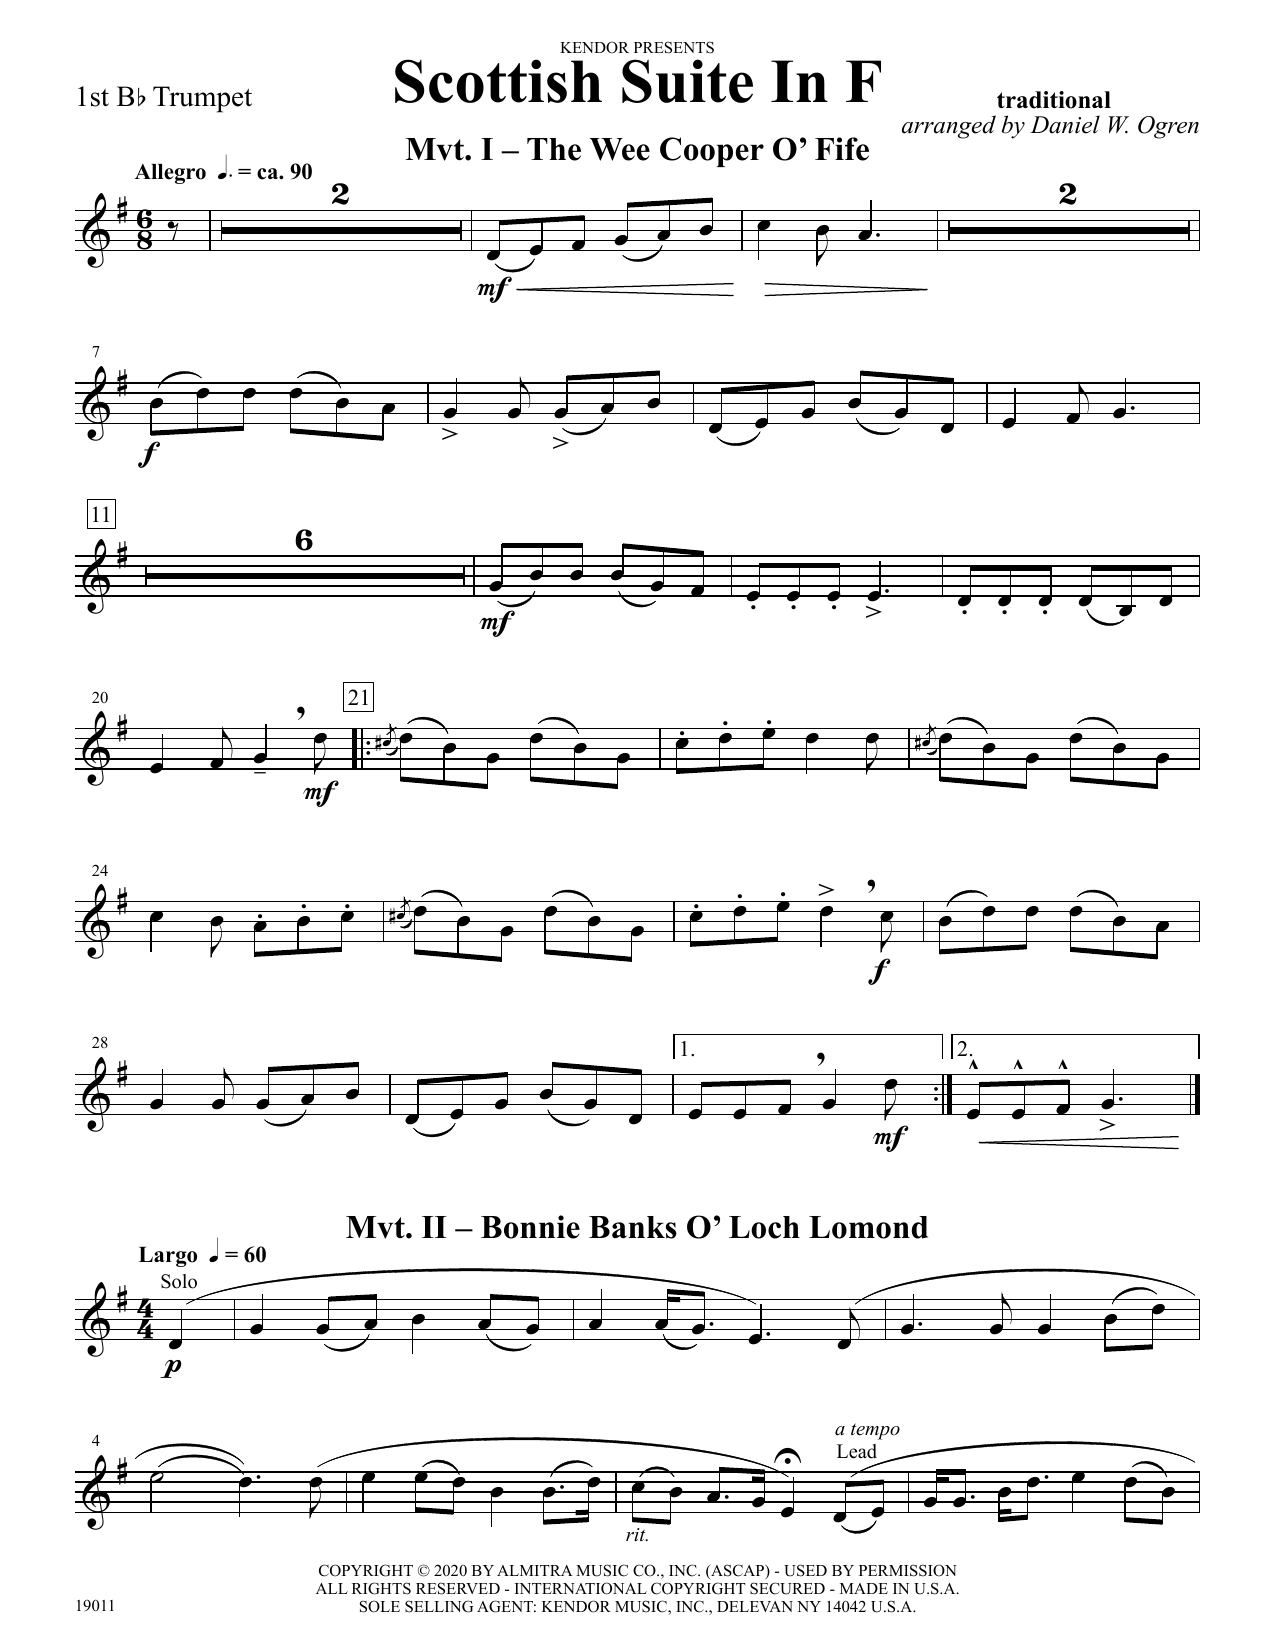 Download Daniel W. Ogren Scottish Suite In F - 1st Bb Trumpet sheet music and printable PDF score & Concert music notes